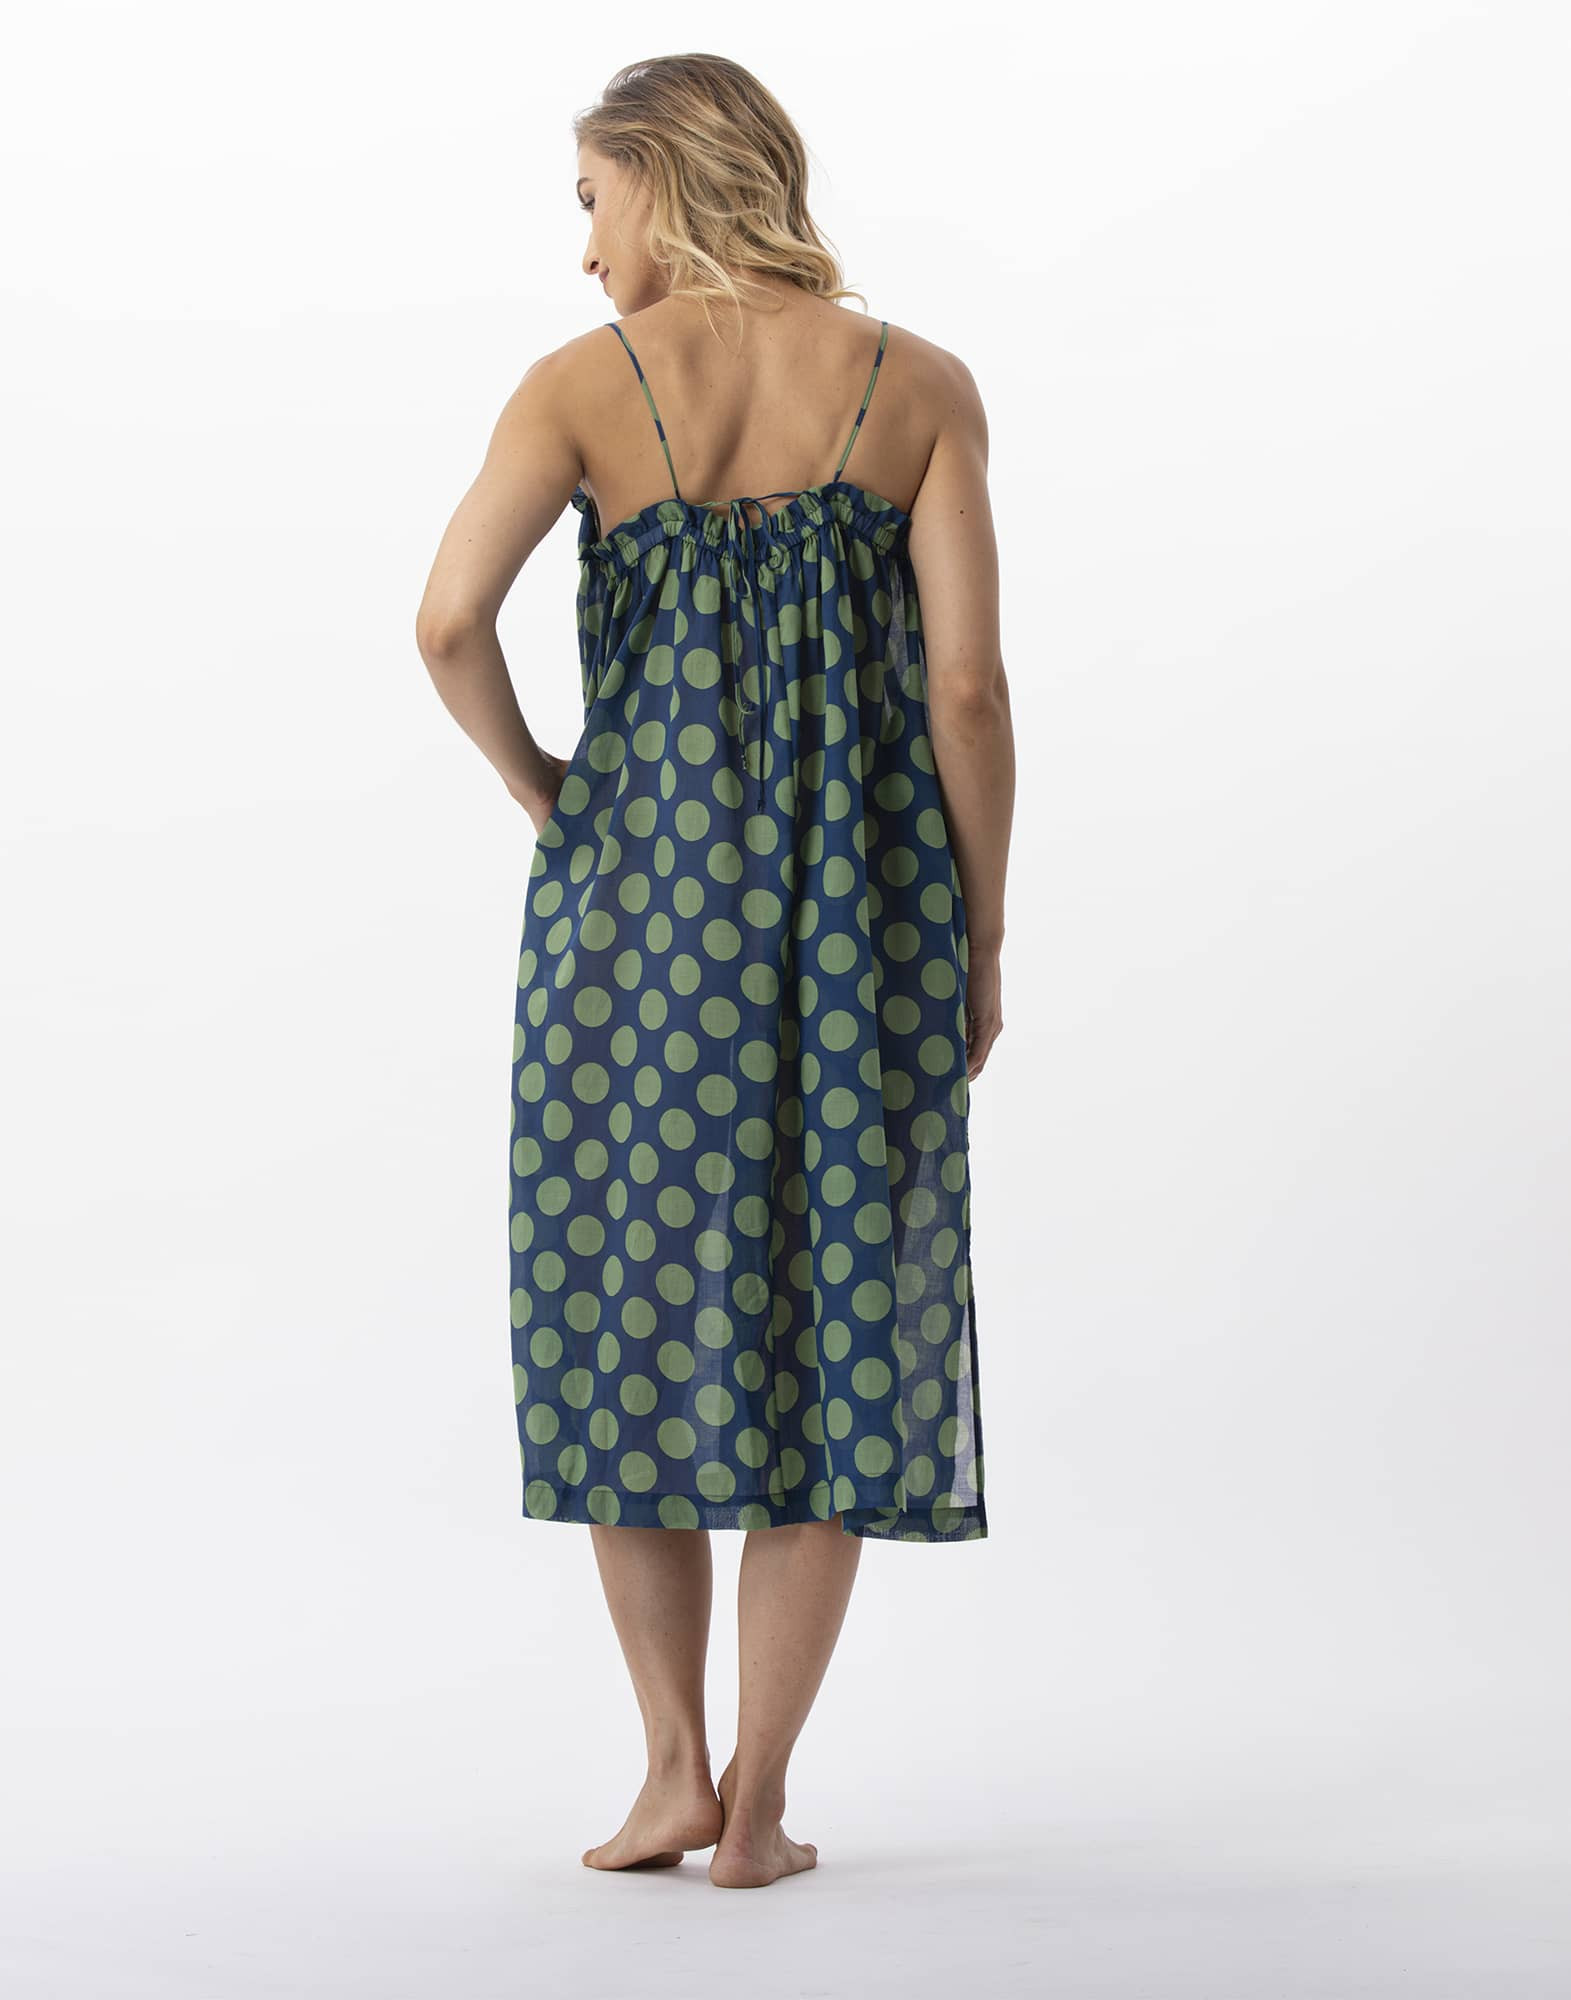 Polka dot printed dress in 100% cotton RIVA 740 green